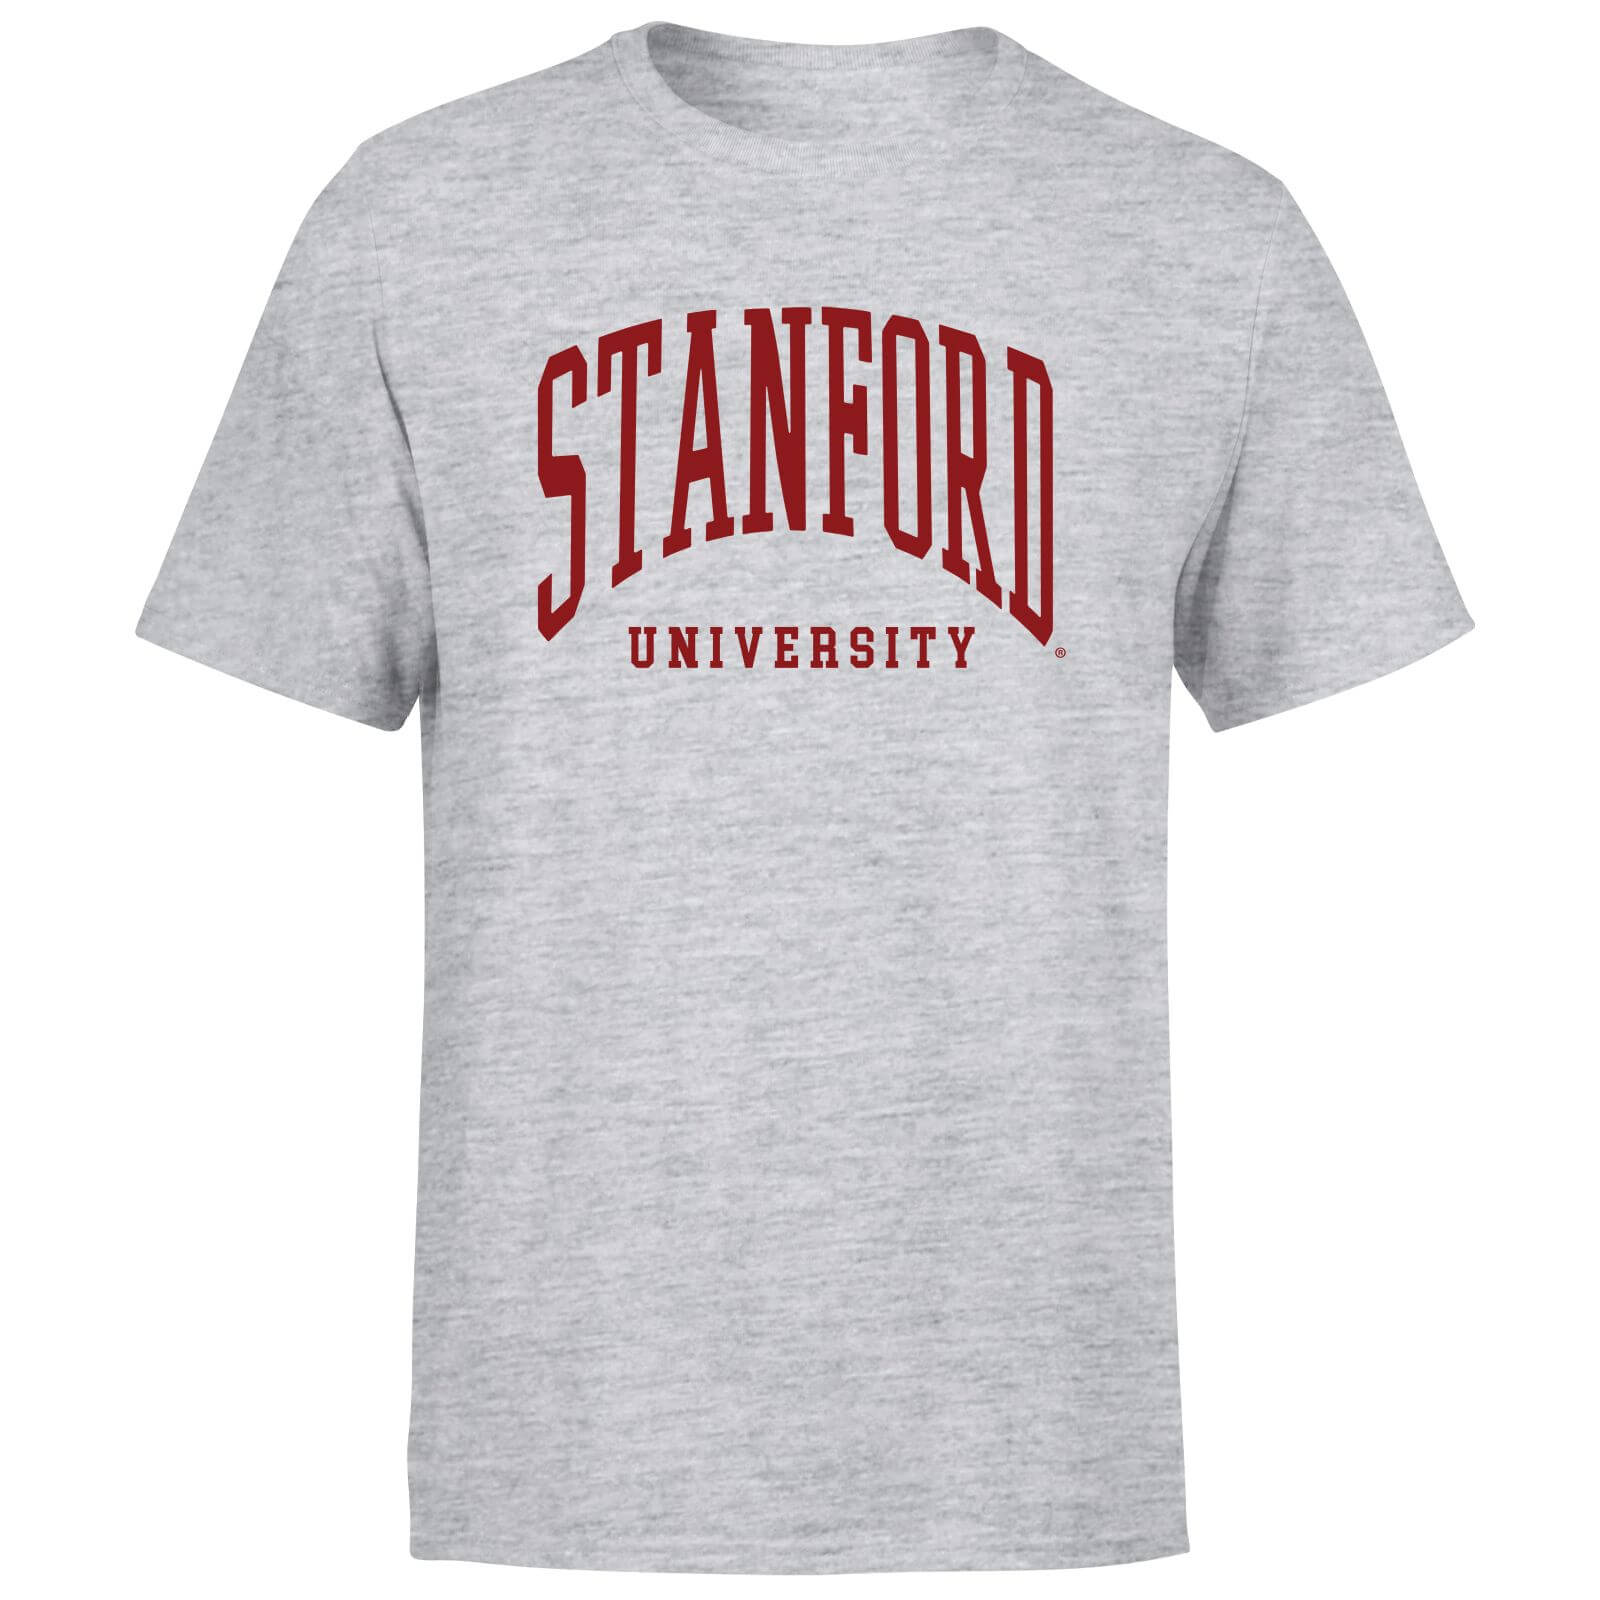 Stanford Gray Tee Men's T-Shirt - Grey - XS